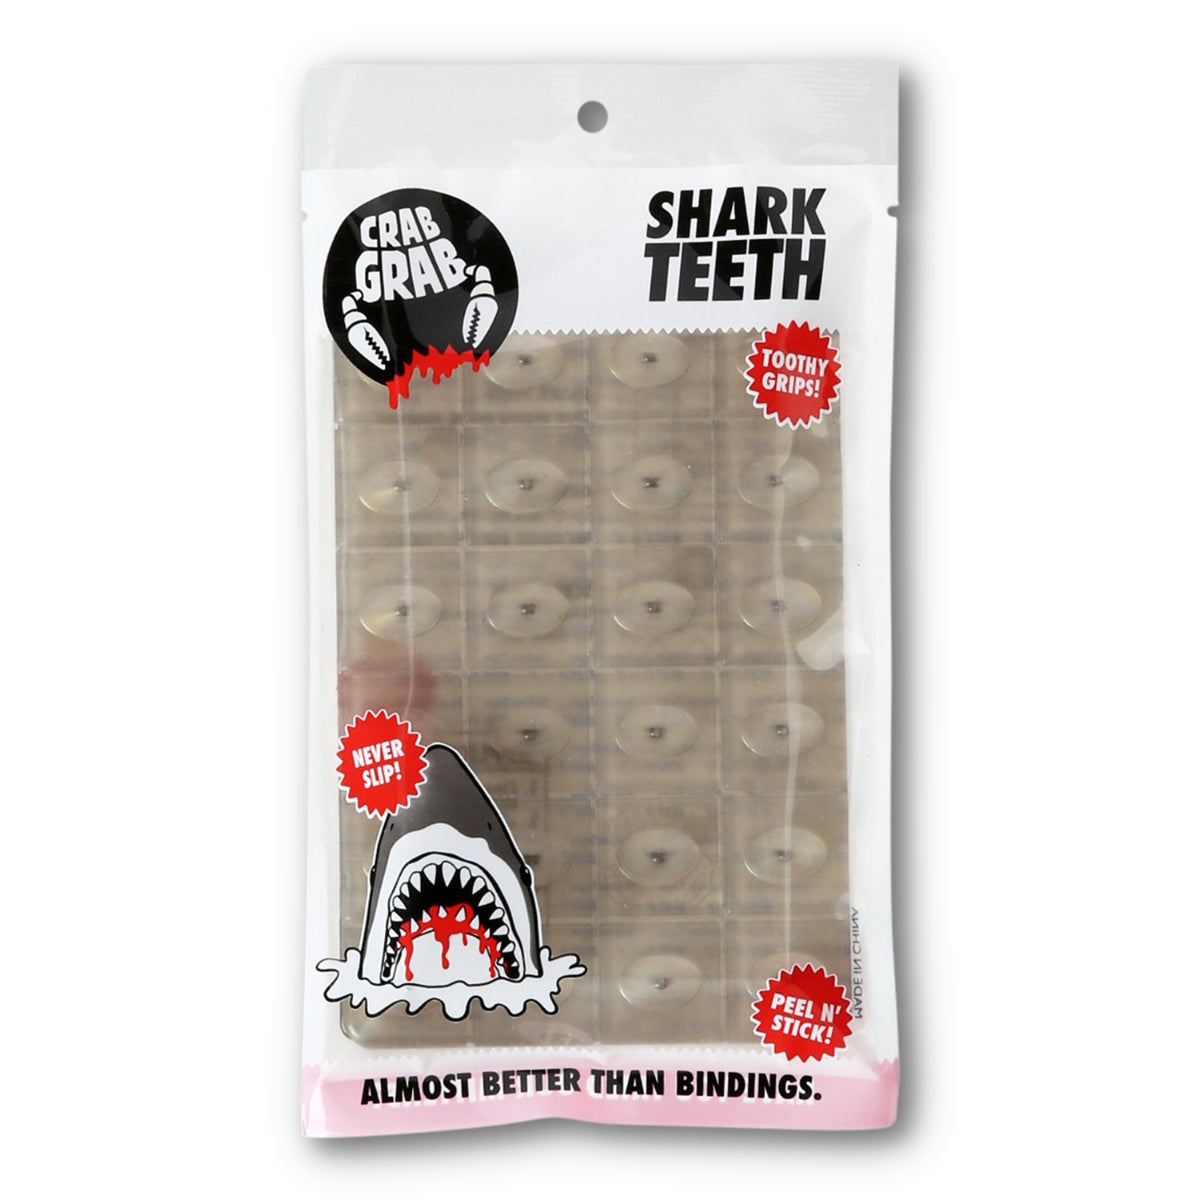 Crab Grab - Shark Teeth - Smoke